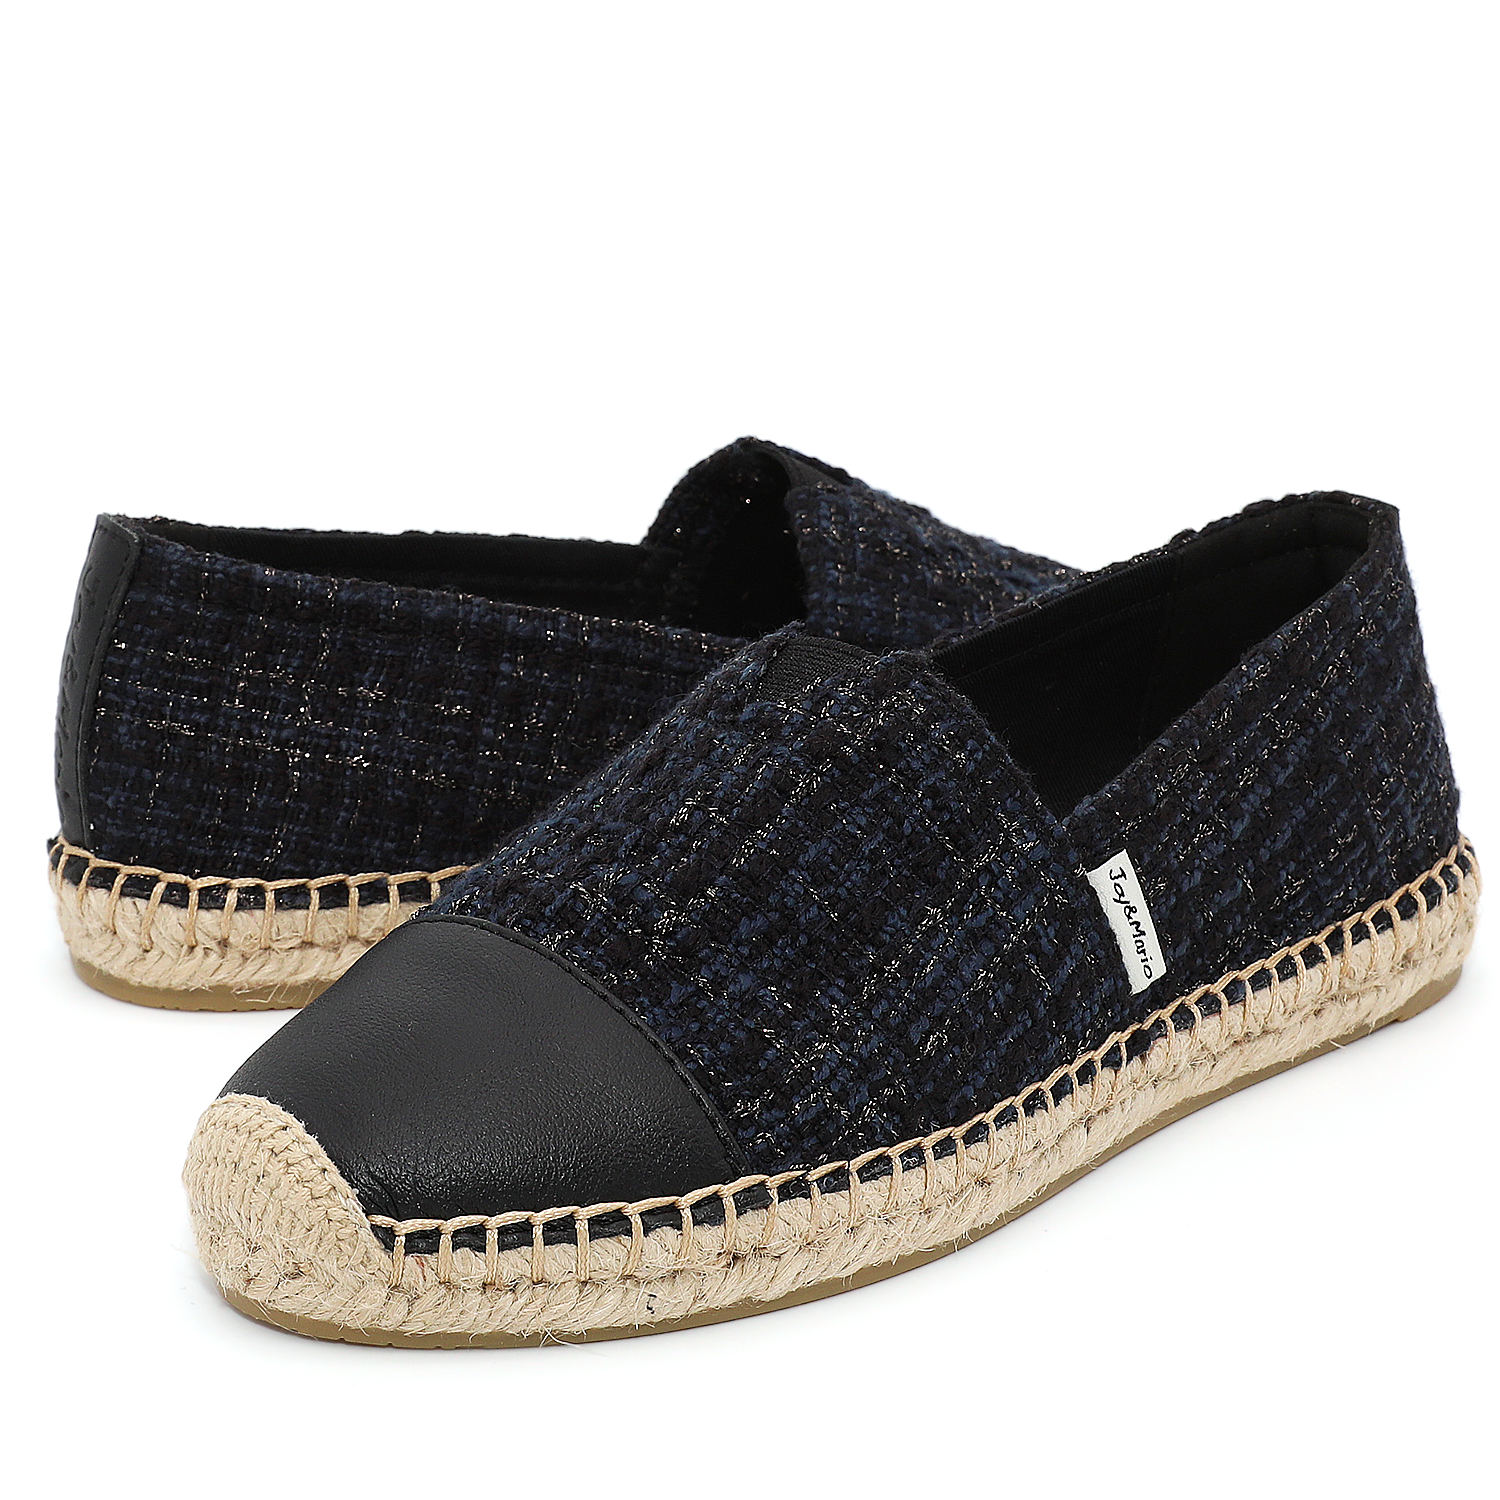 JOY&MARIO Handmade Women’s Slip-On Espadrille Tweed Loafers Flats in Navy-A01962W